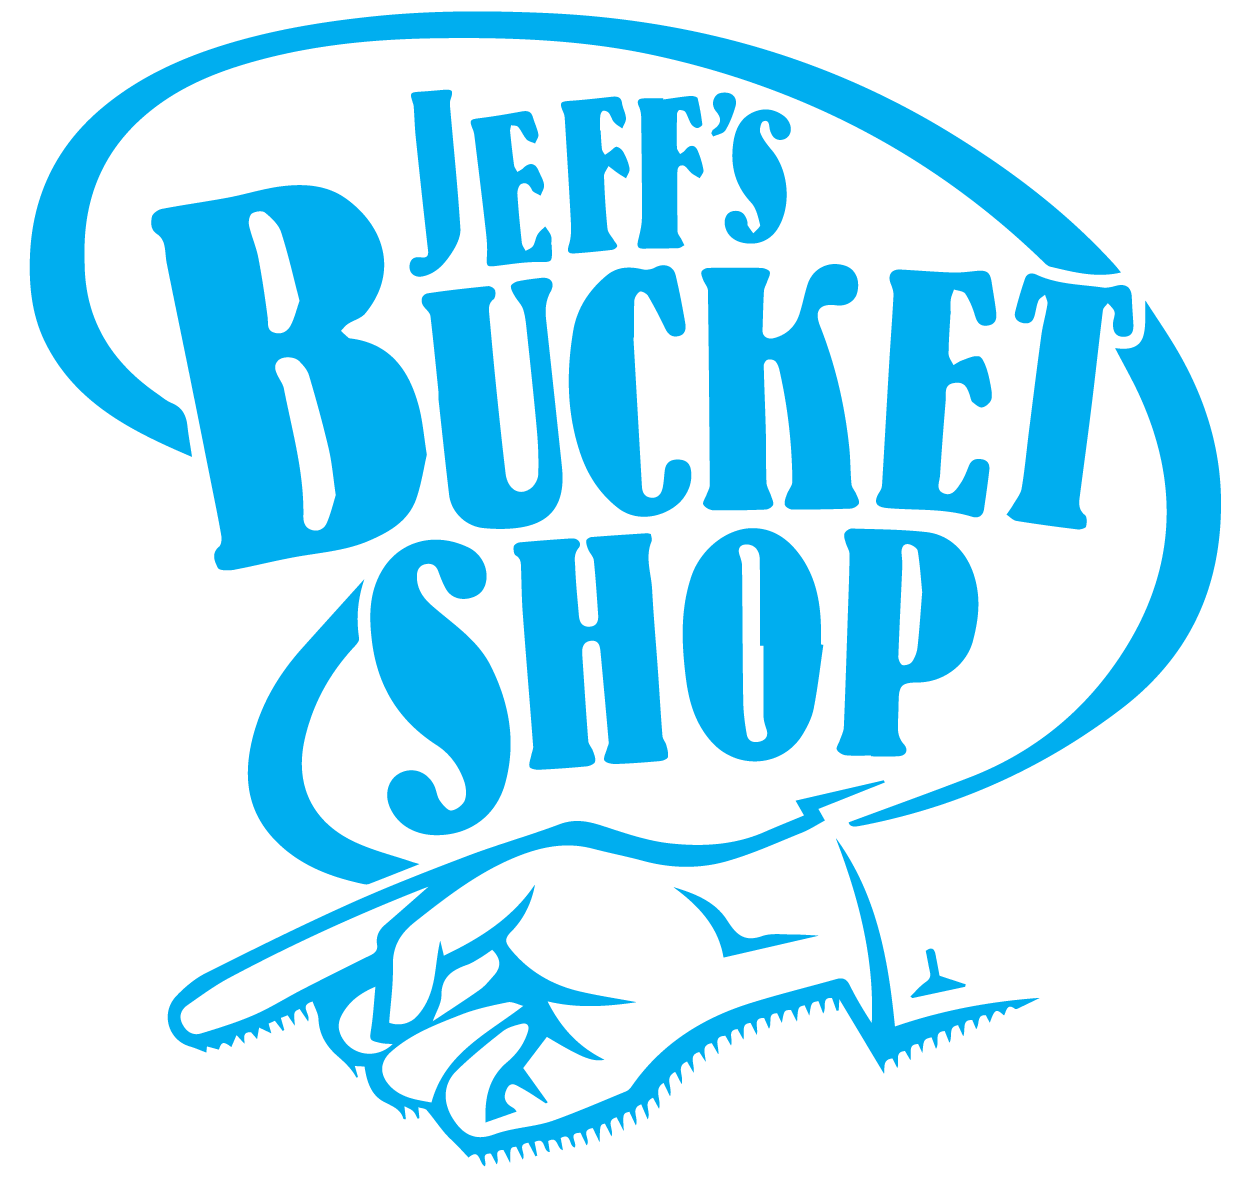 Jeff Bucket Shop